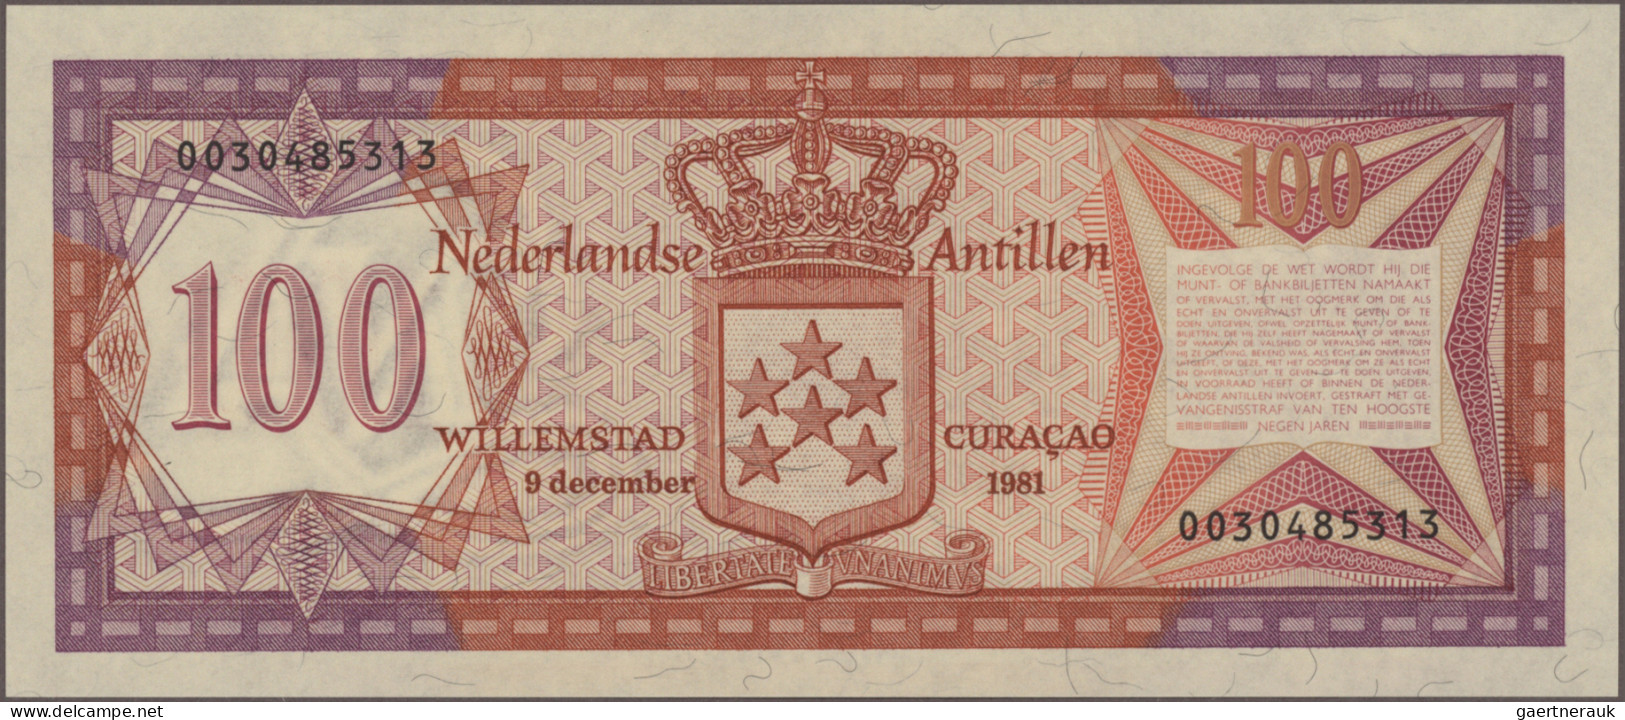 Netherlands Antilles: Bank Van De Nederlandse Antillen, Lot With 7 Banknotes, 19 - Nederlandse Antillen (...-1986)